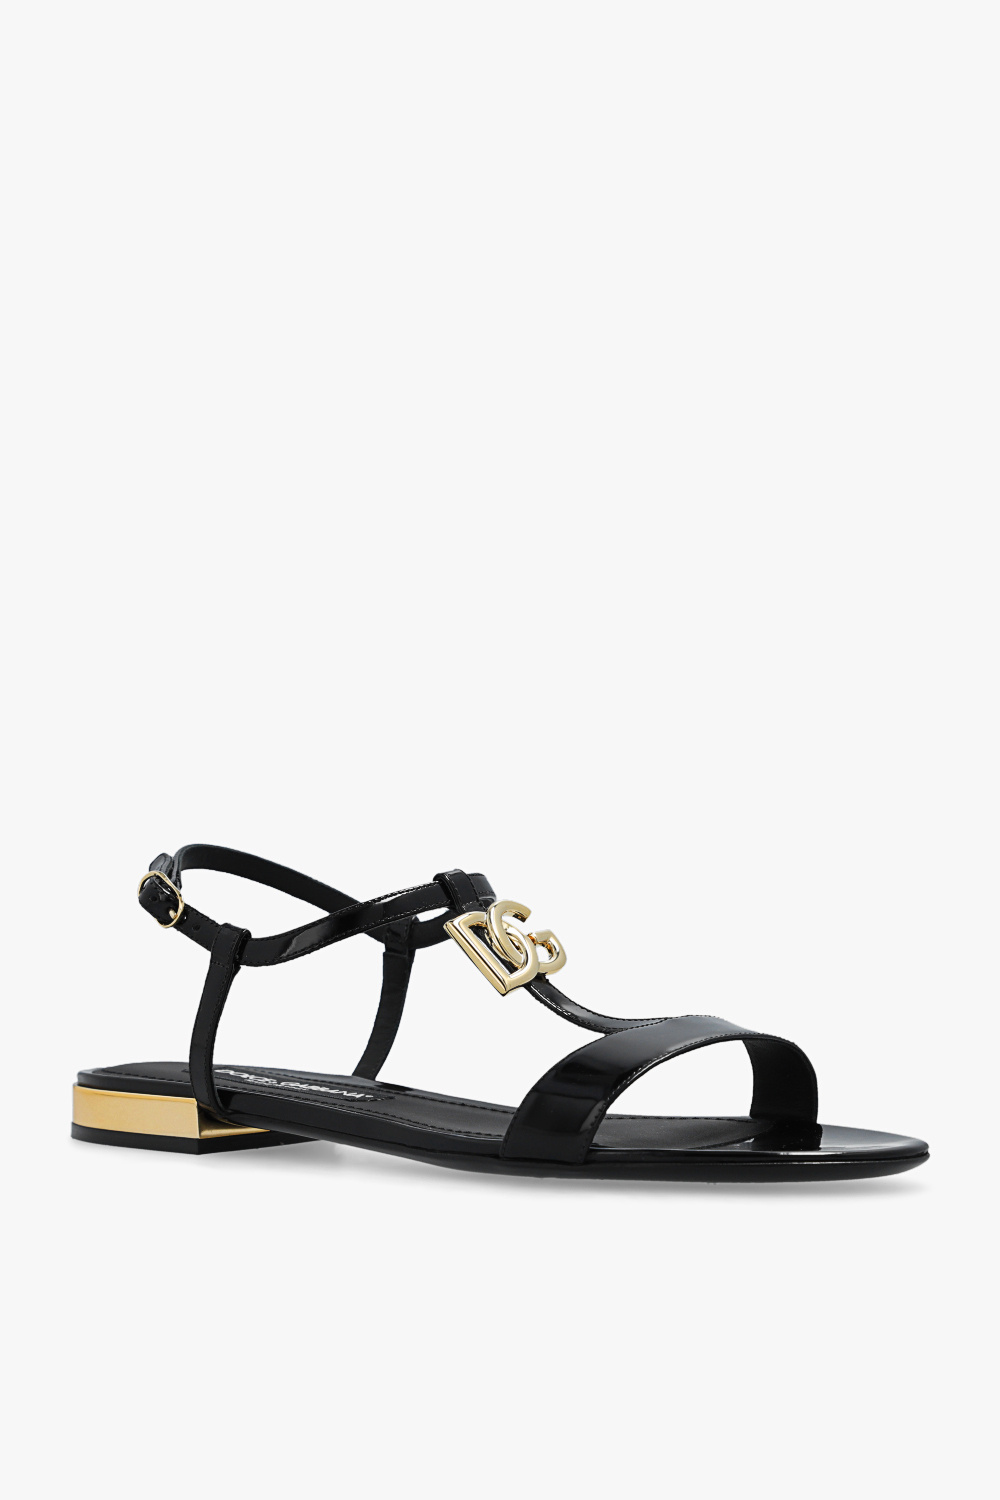 Dolce & Gabbana ‘Bianca’ glossy sandals | Women's Shoes | Vitkac